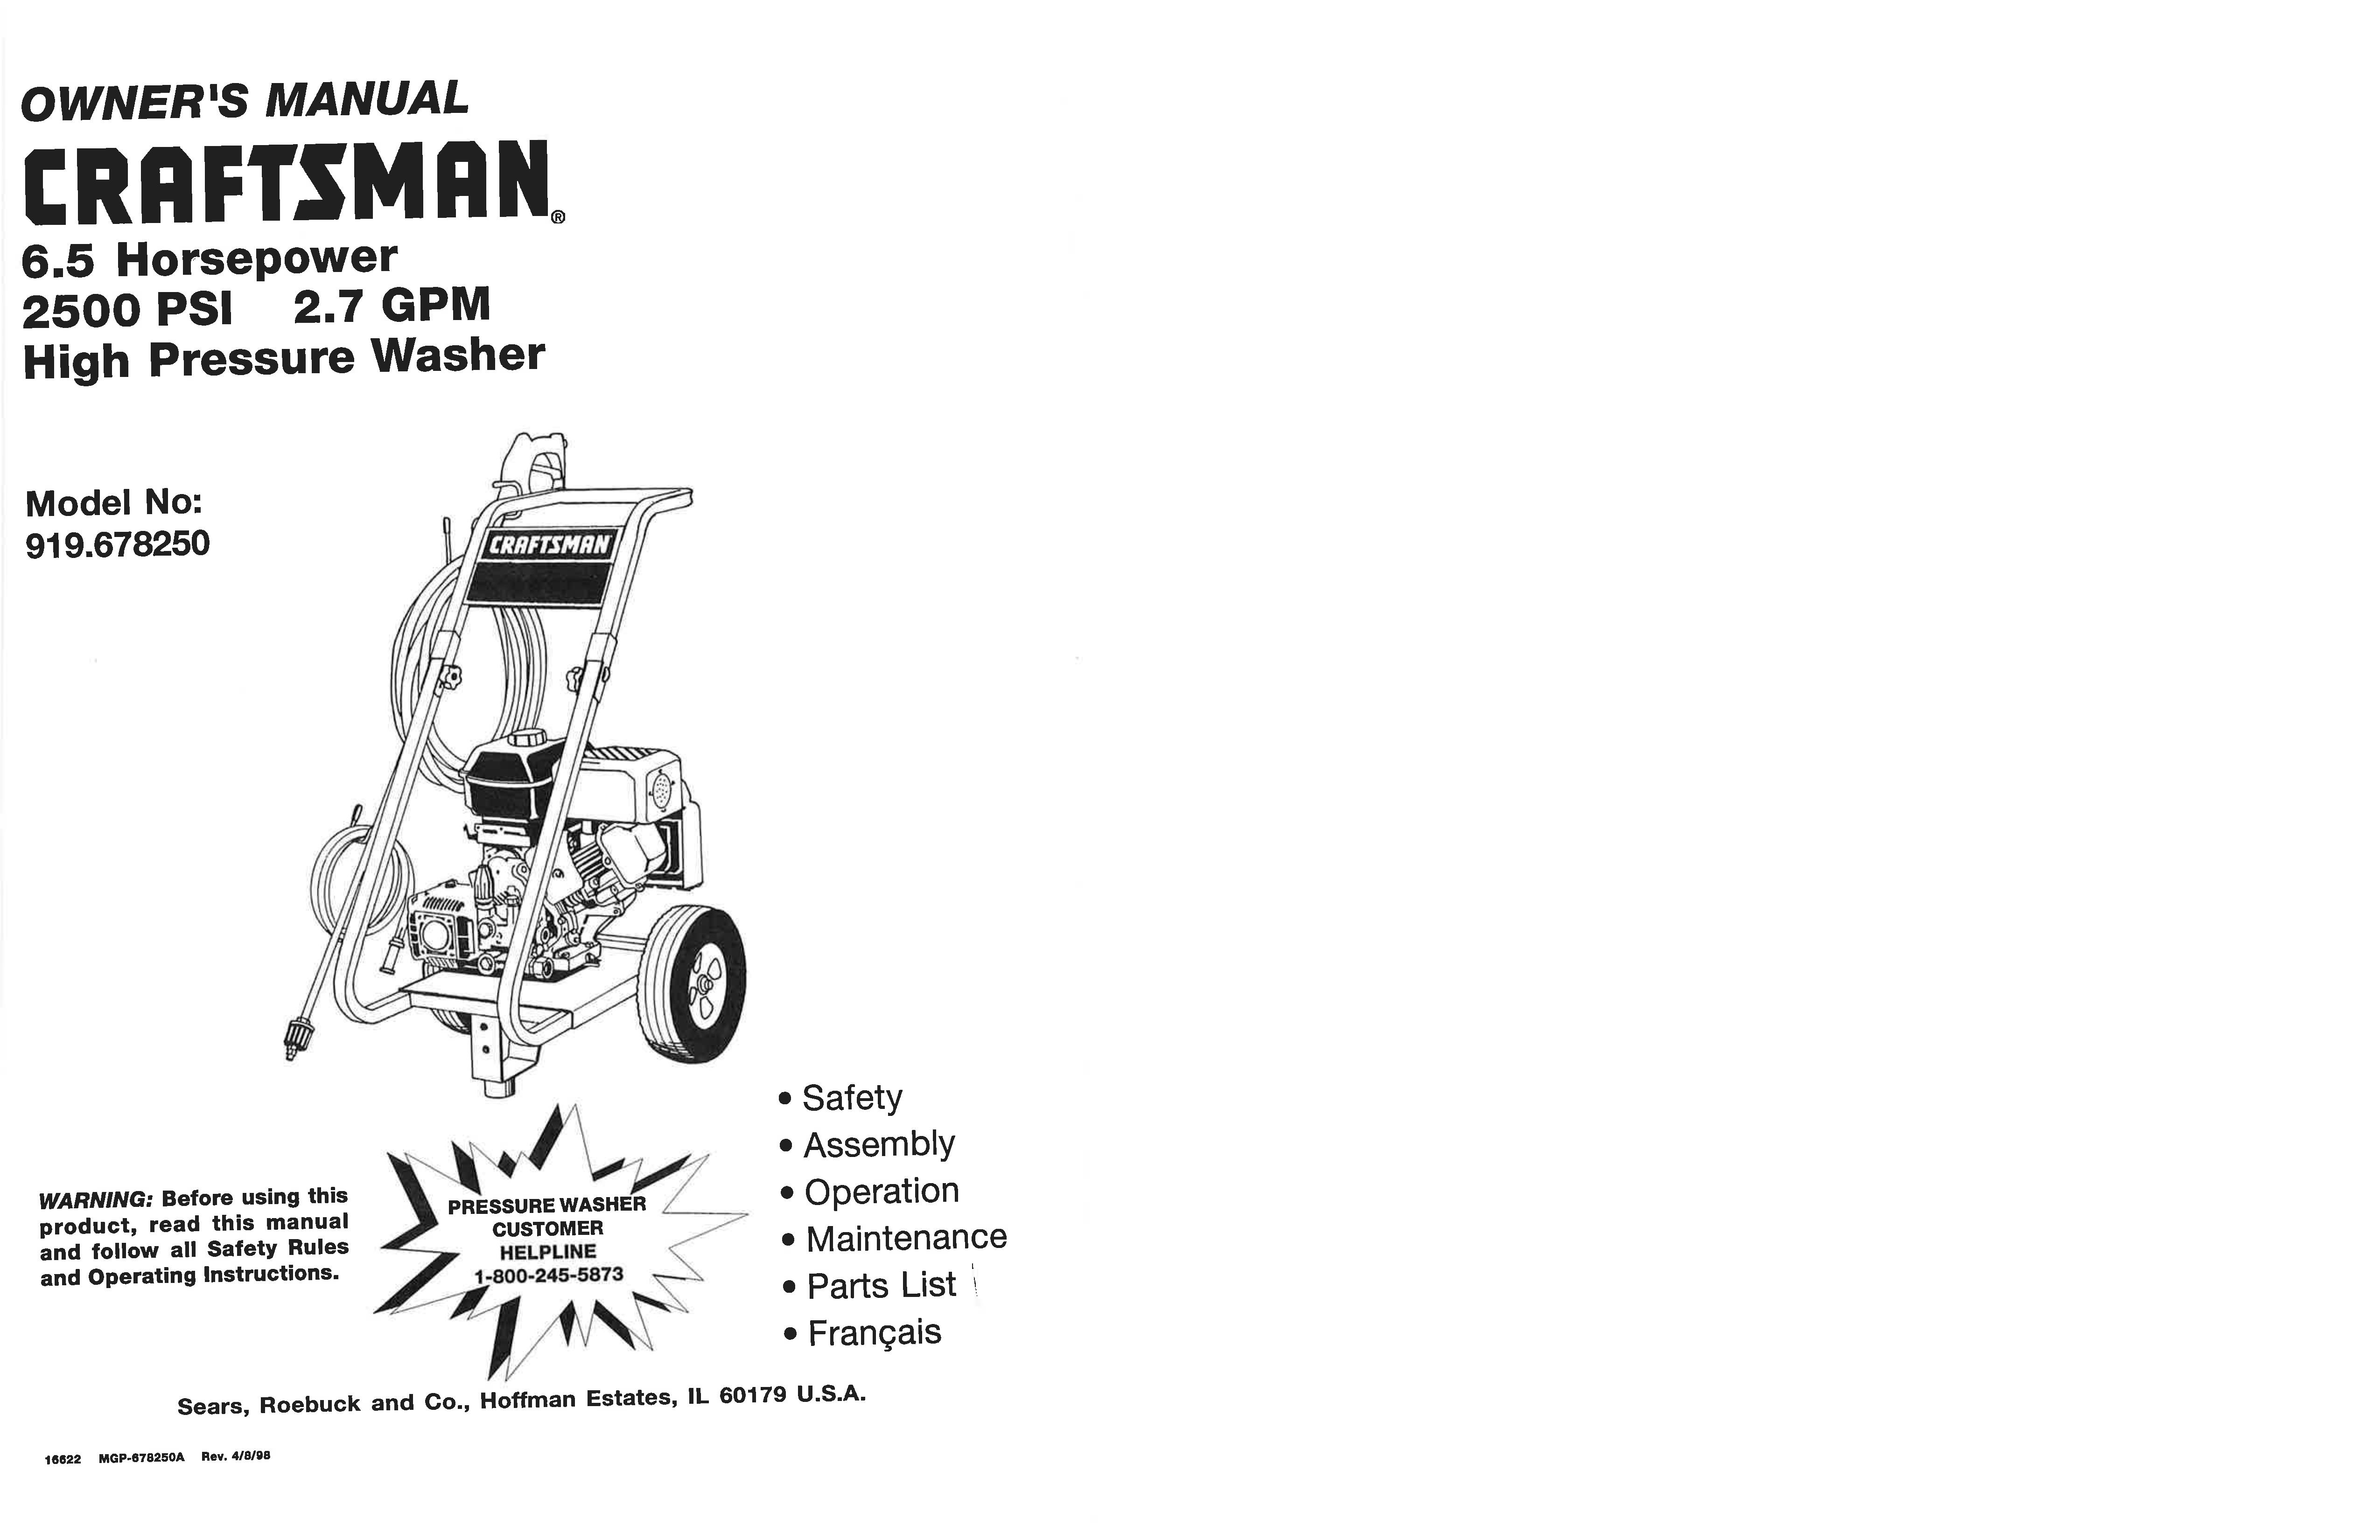 Craftsman MGP-678250A Pressure Washer User Manual